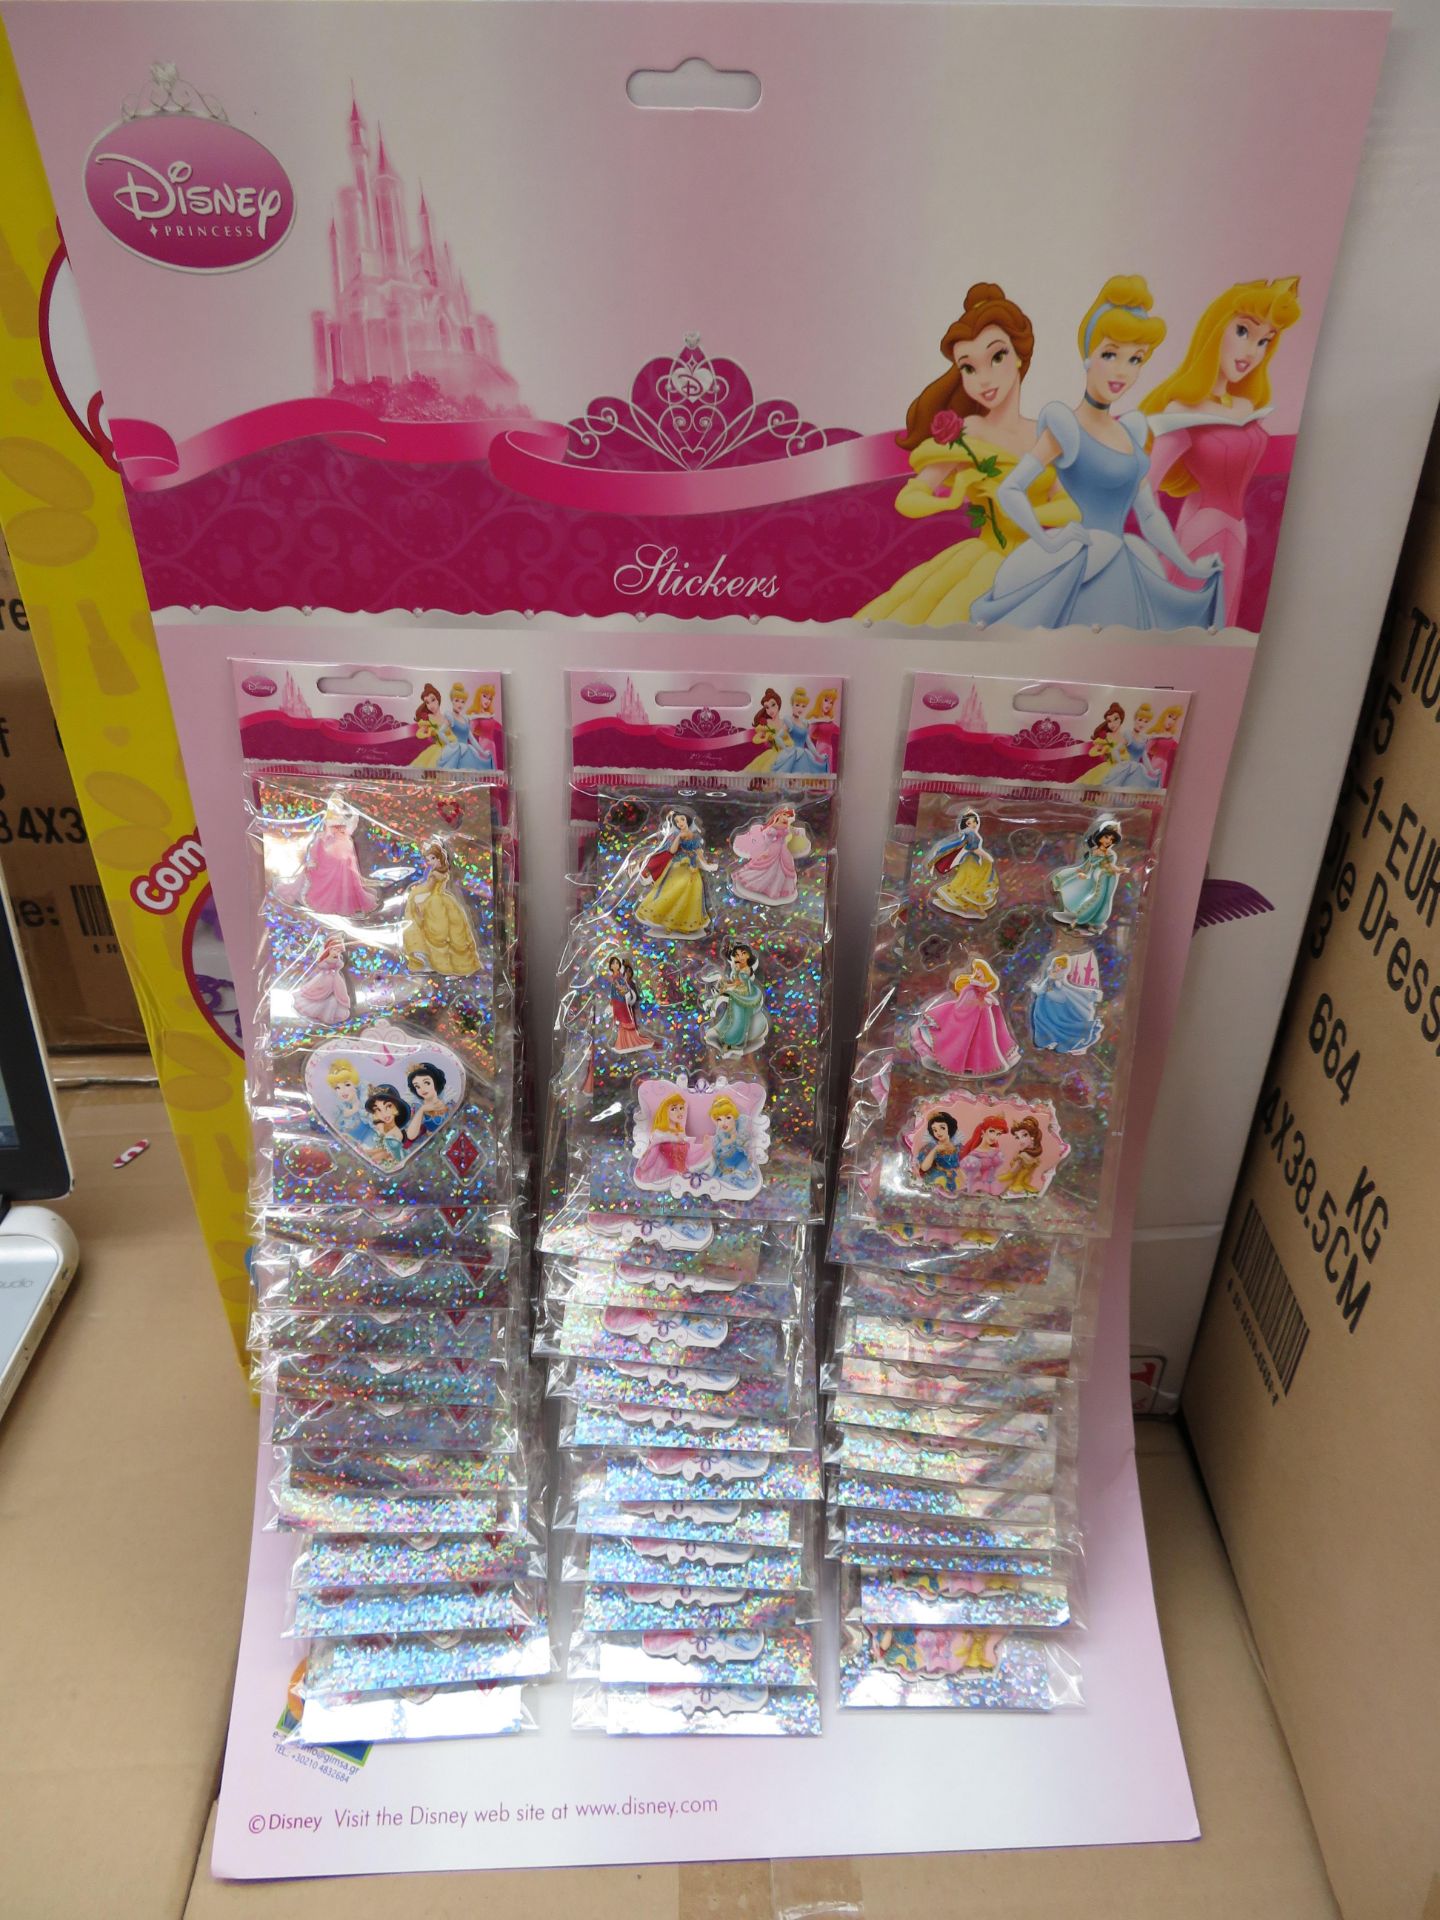 900 x PACKS of Disney Princess Foam 3D Stickers - Various Designs. Brand New Stock. RRP £1.99 per